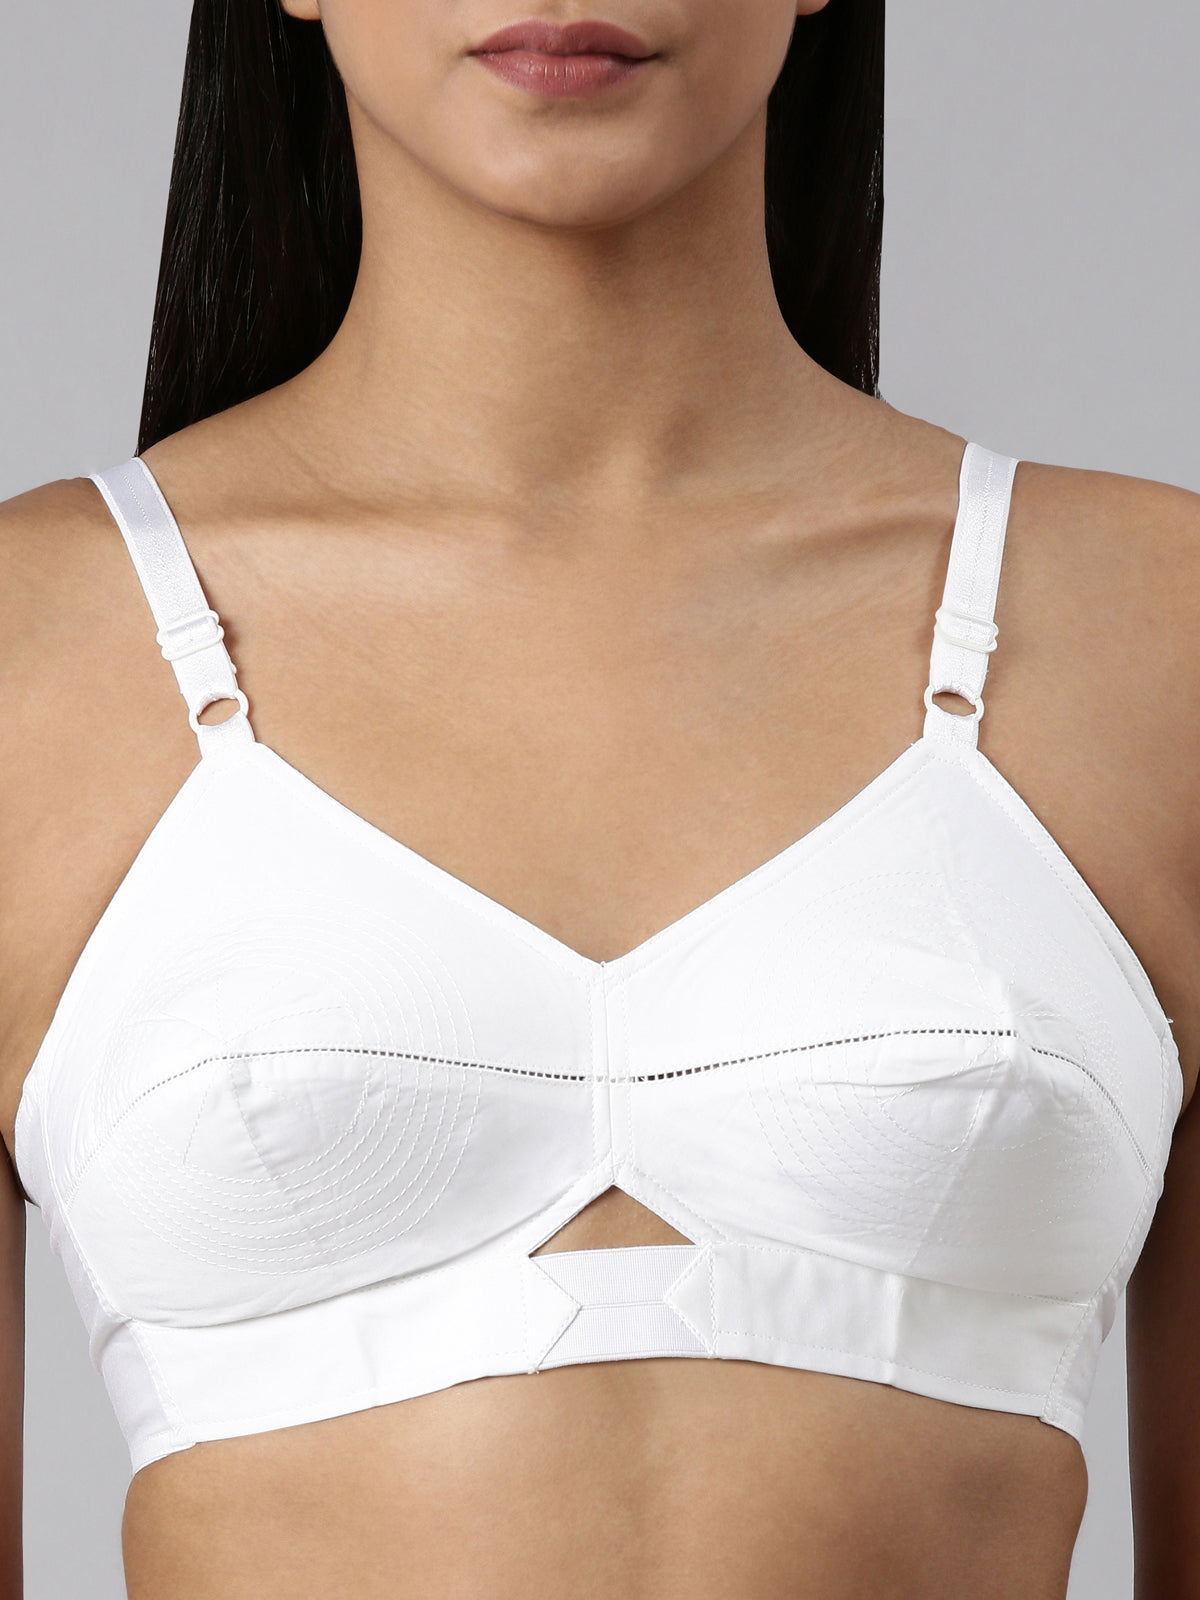 blossom-authentic bra-B Cup-white1-Woven cotton-everyday bra